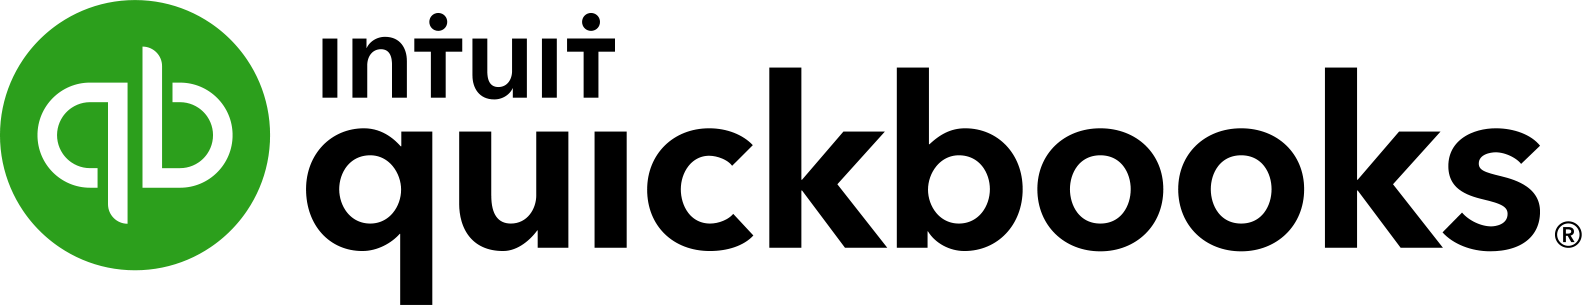 Intuit_QB-Logo